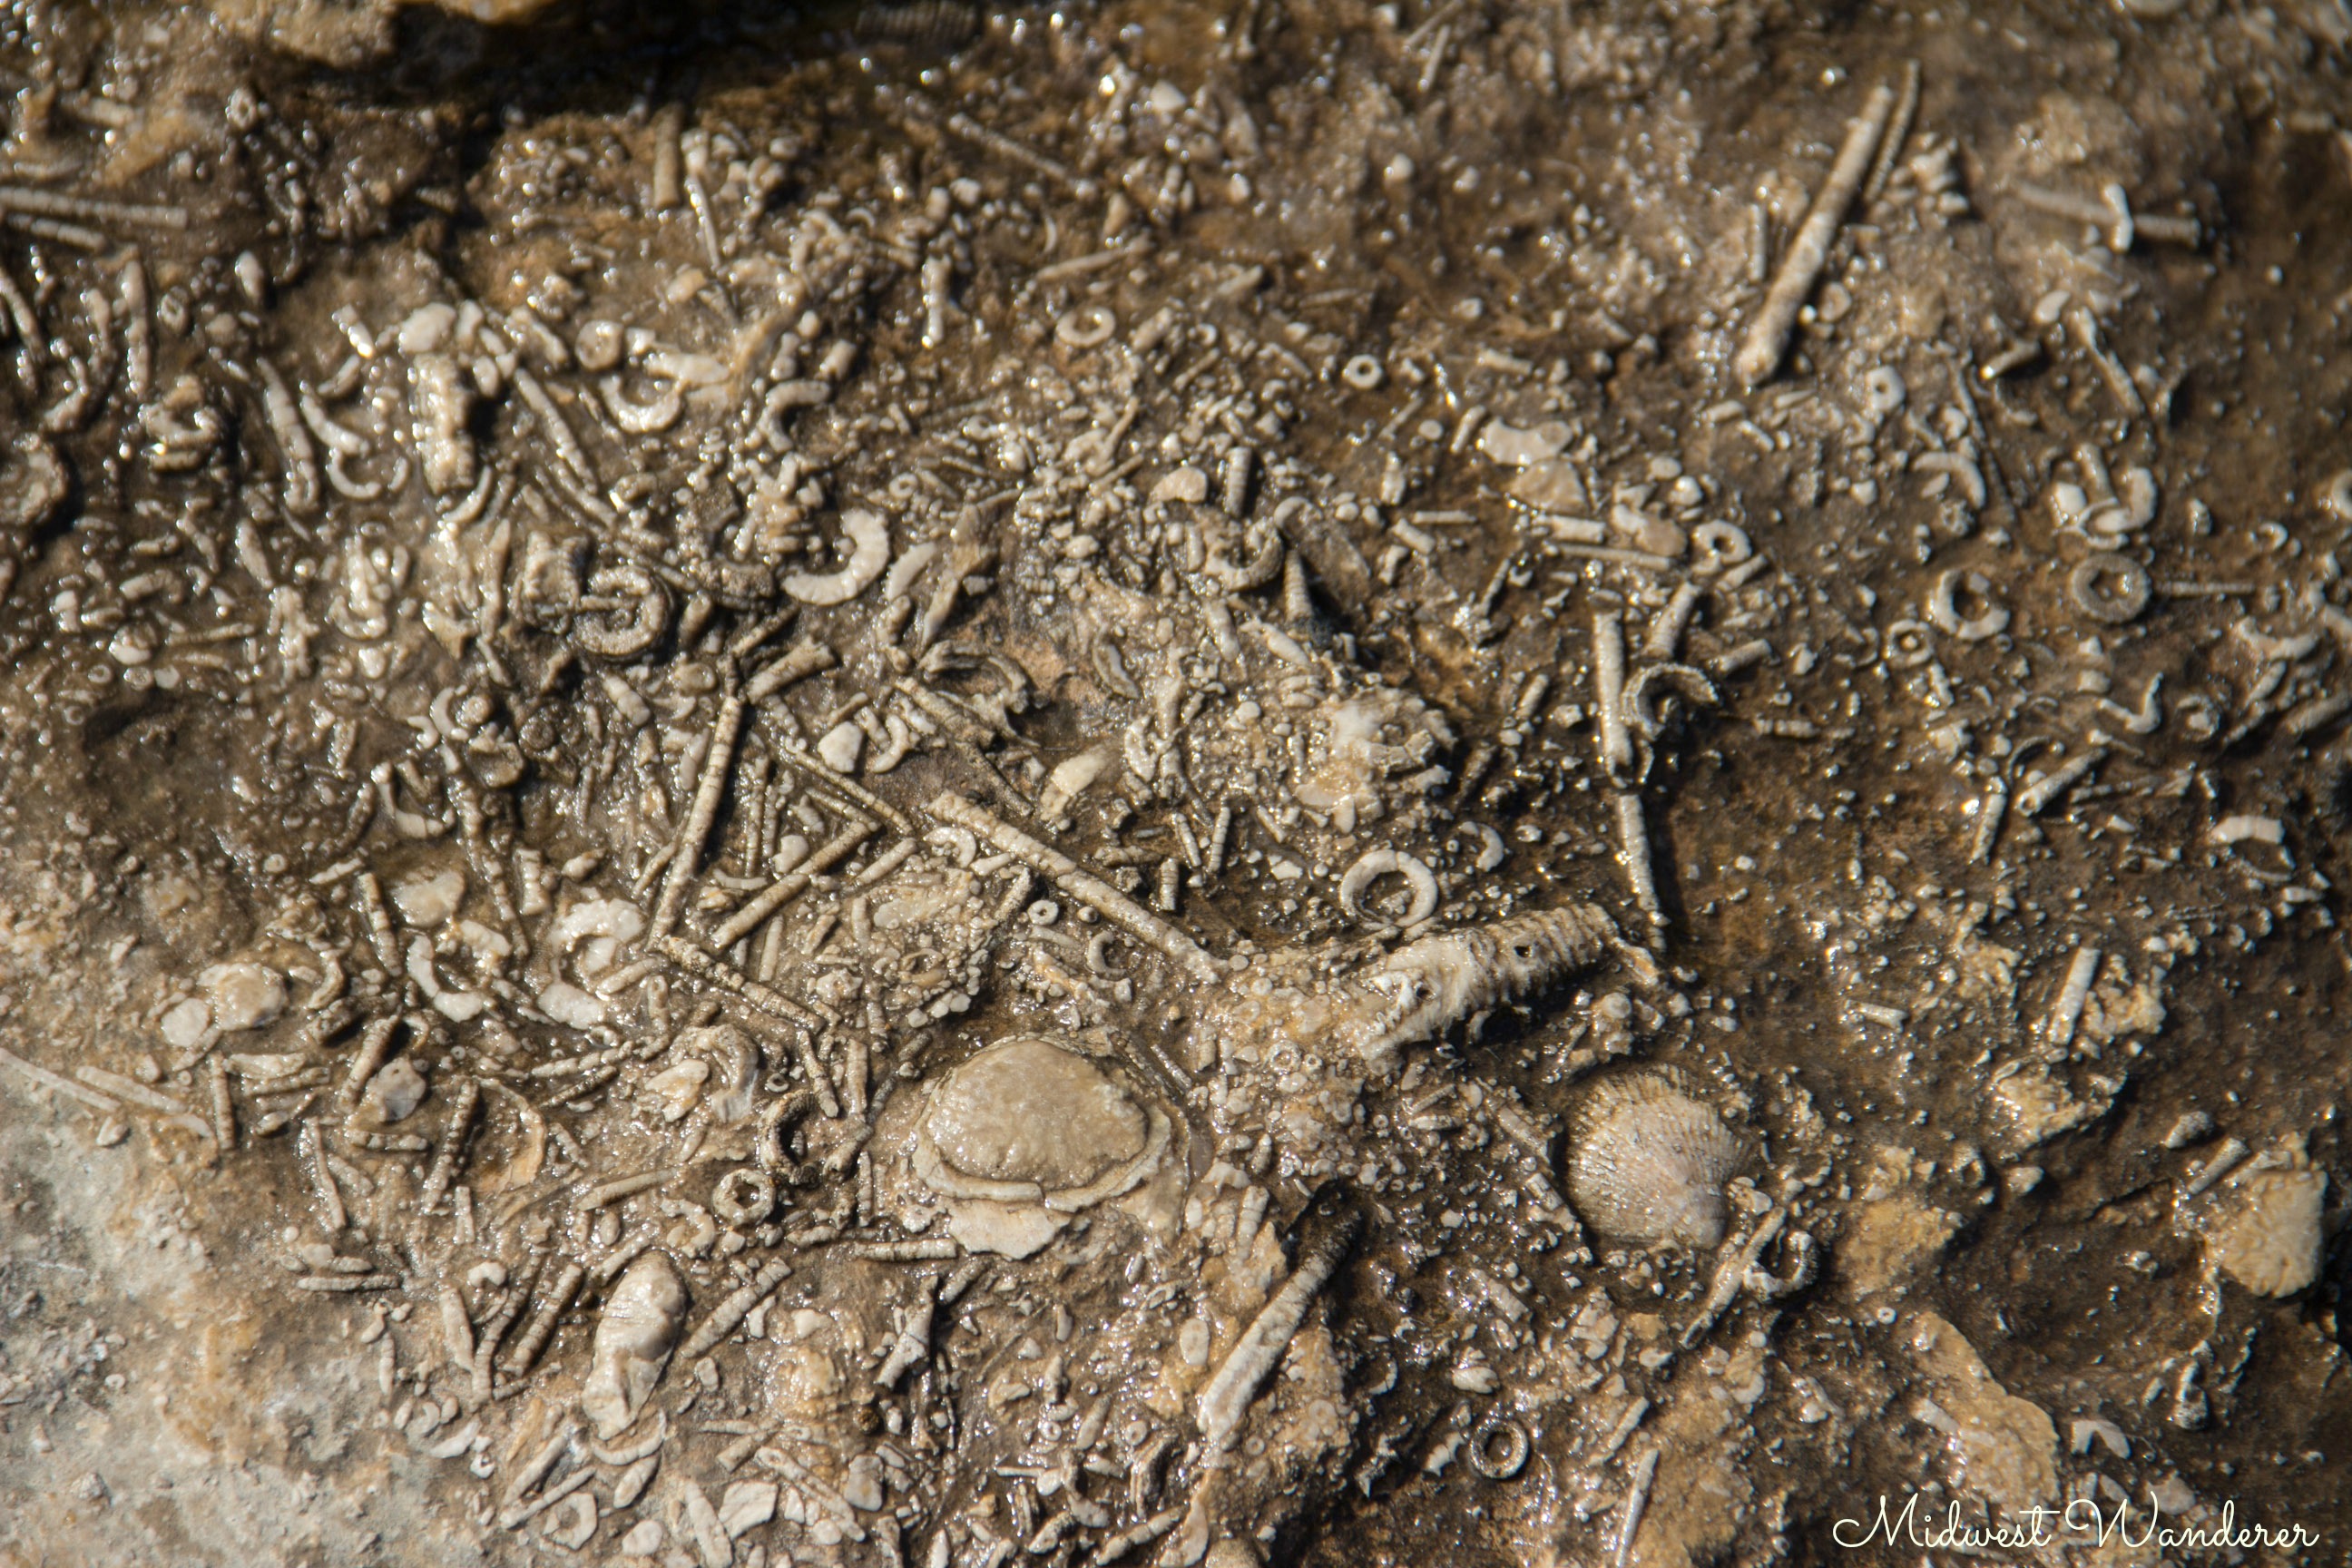 Falls-of-the-Ohio-Fossils-1.jpg